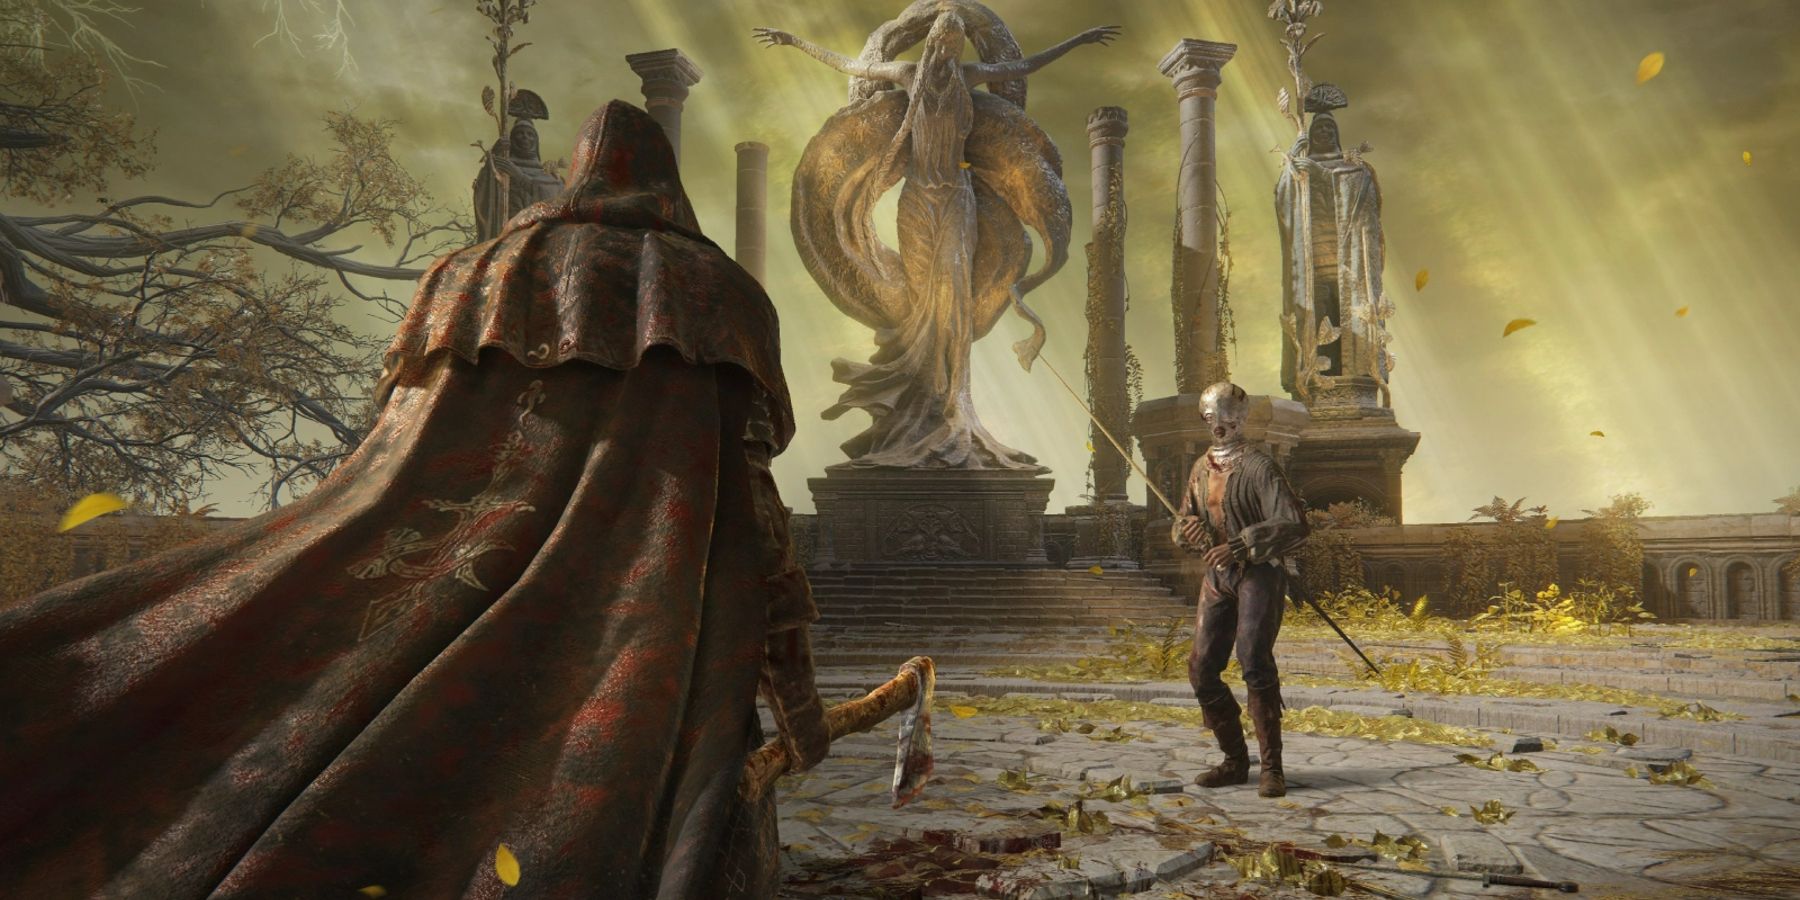 Elden Ring, God of War sweep The Game Awards 2022: All winners - Dexerto